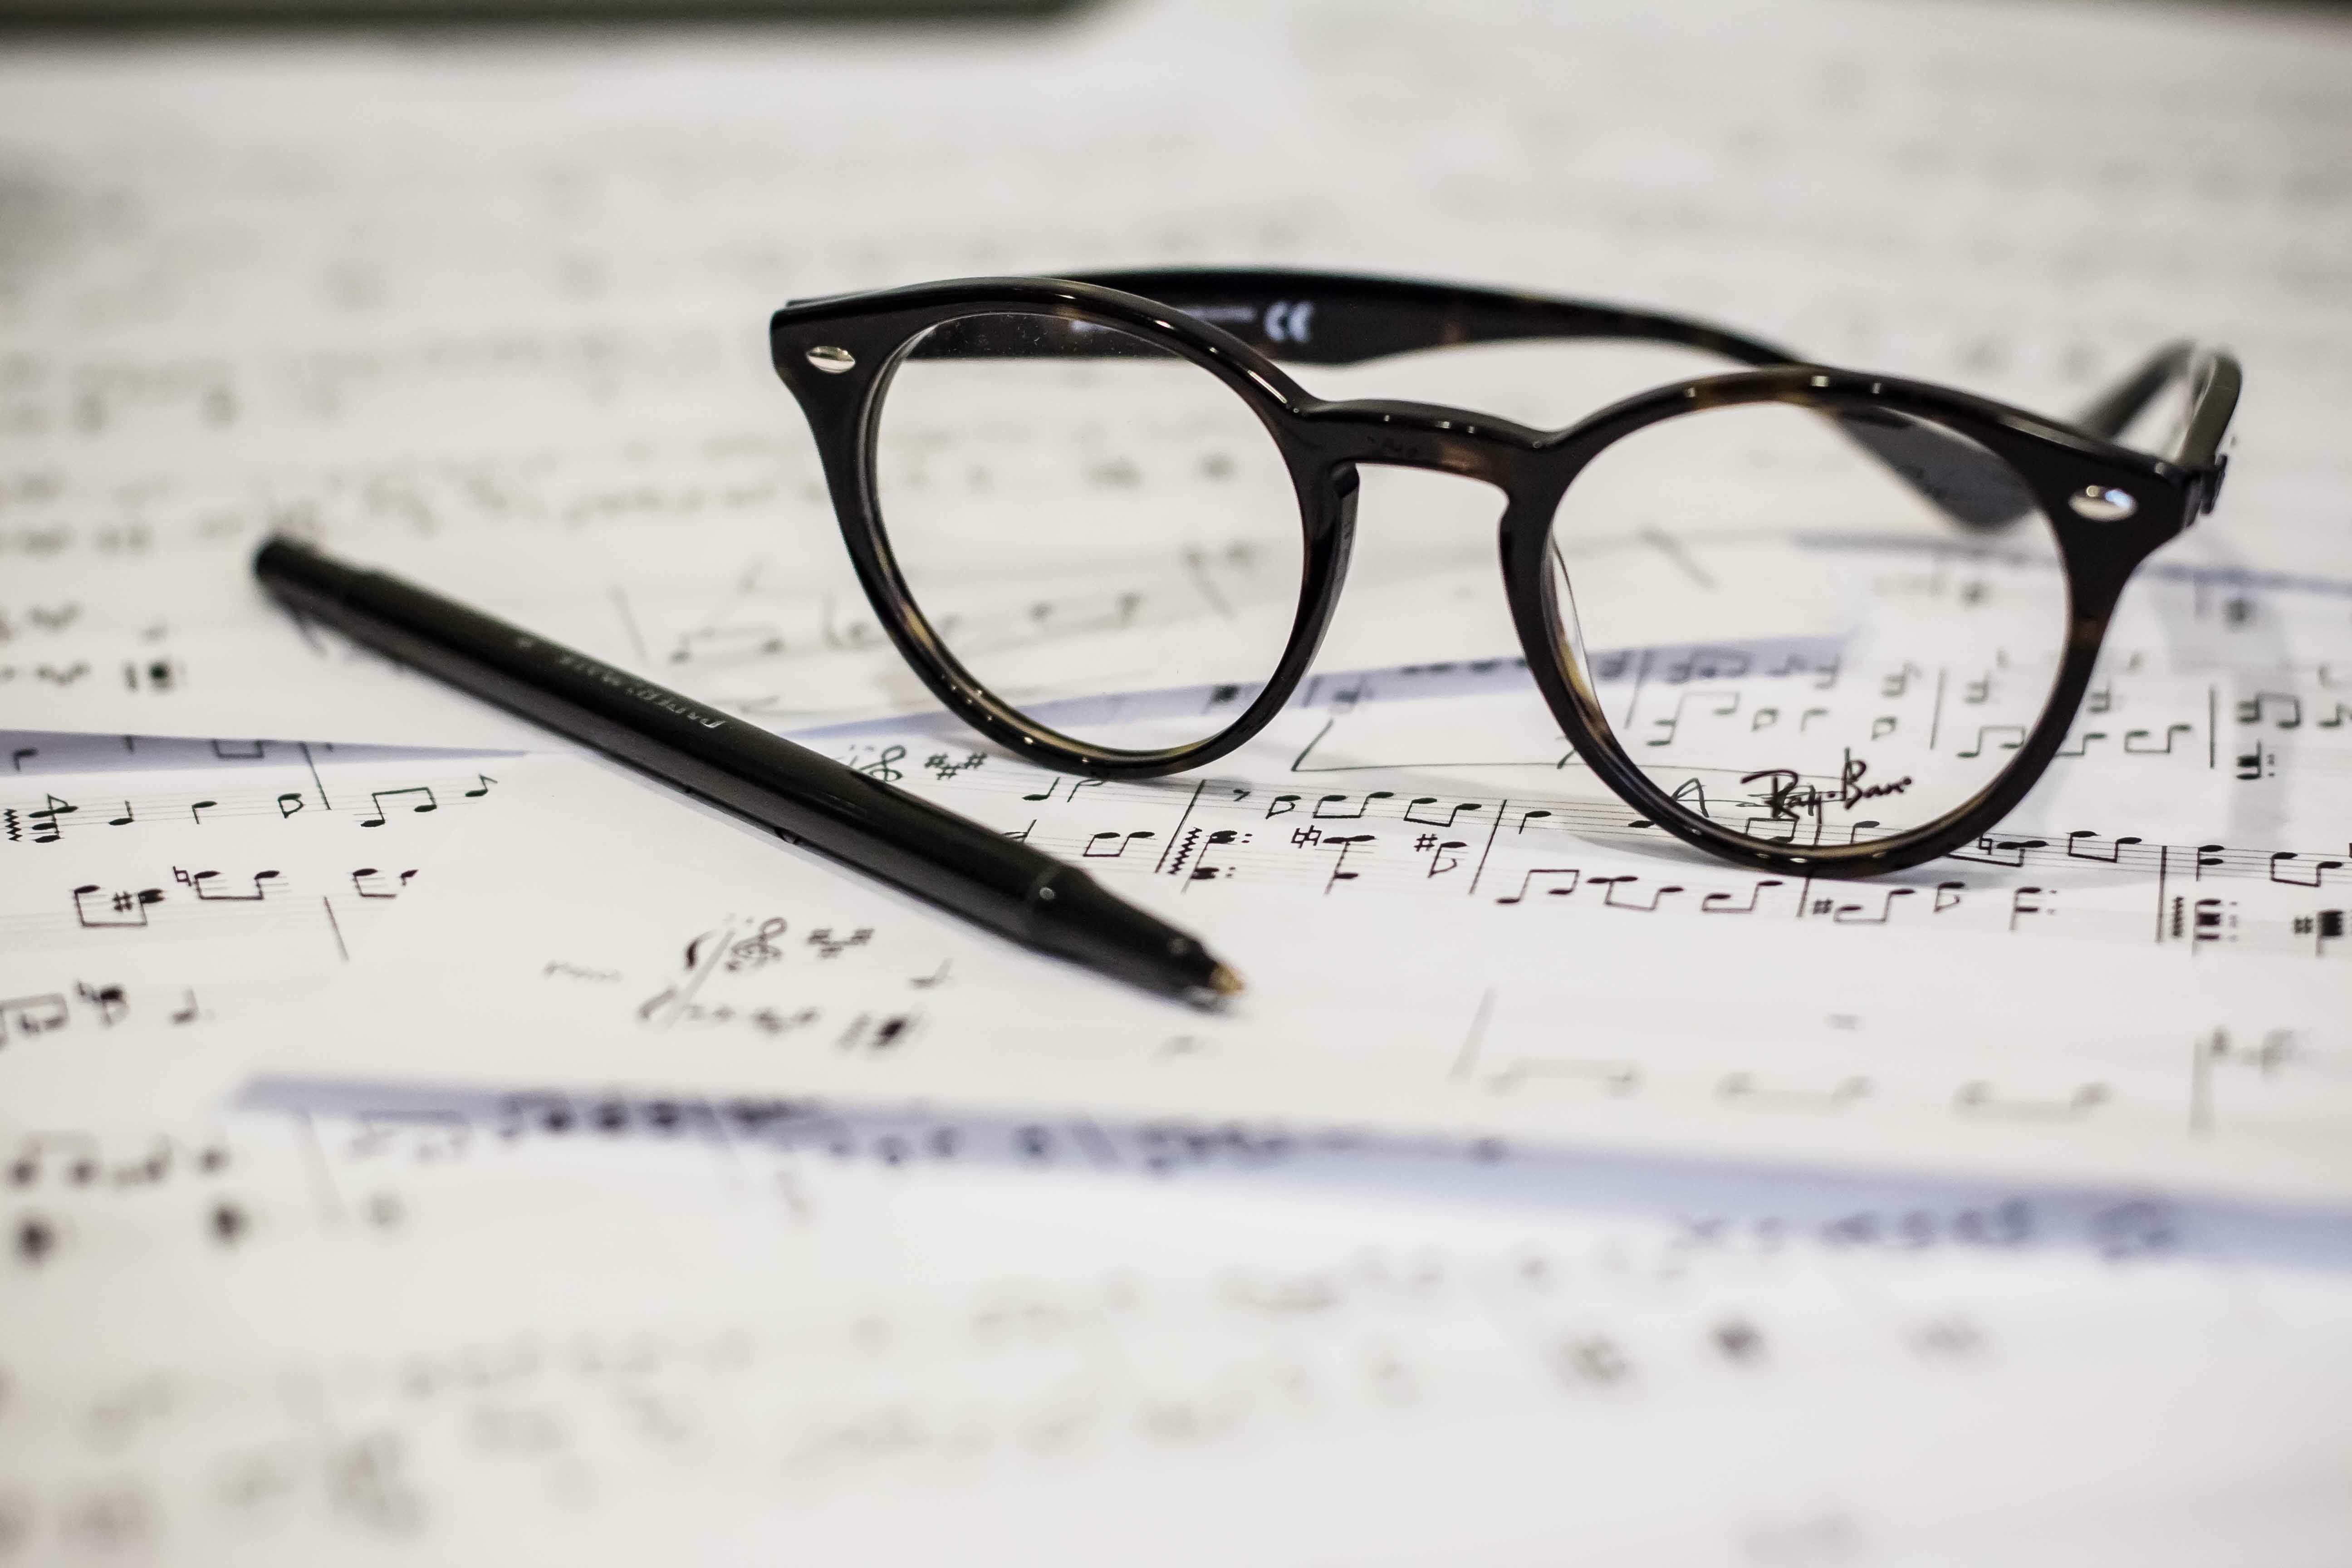 music, miscellanea, miscellaneous, pen, glasses, spectacles, notes